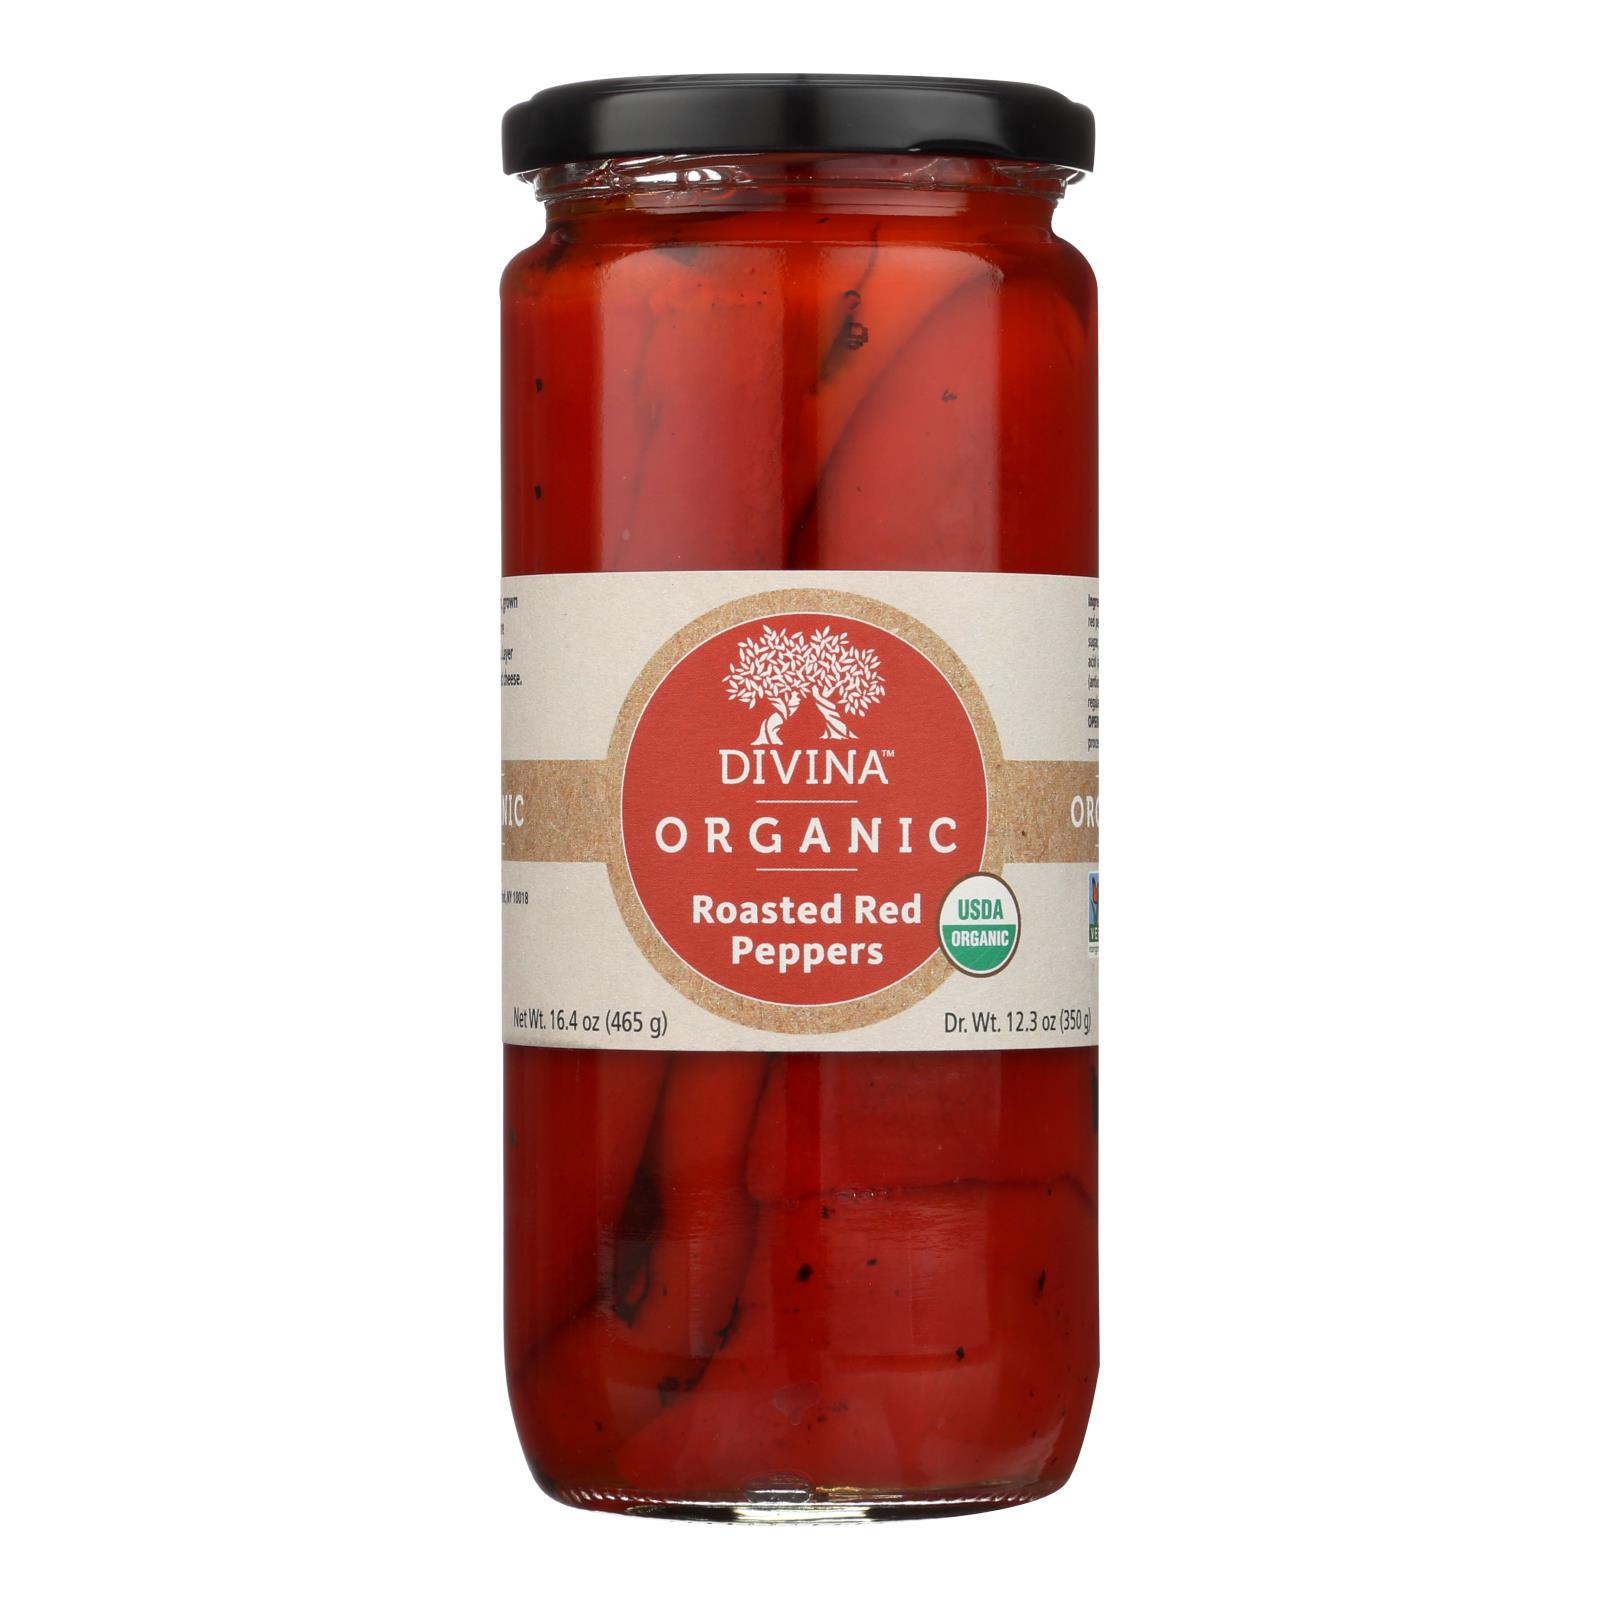 Divina, Organic Fire Roasted Sweet Peppers - 6개 묶음상품 - 16.2 OZ